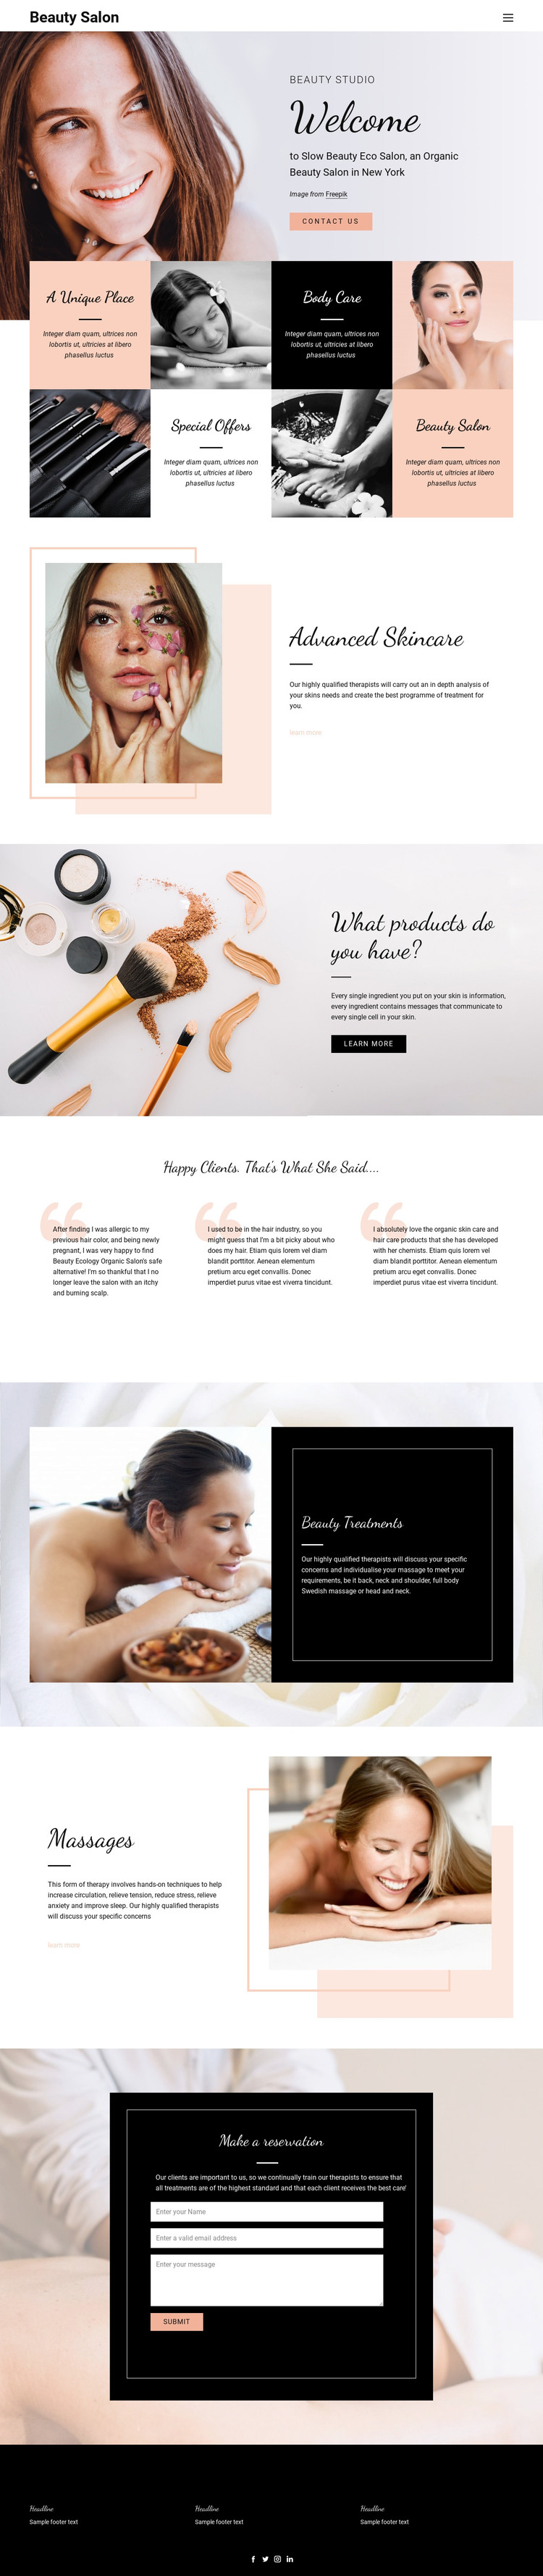 Hair, nail and beauty salon Homepage Design